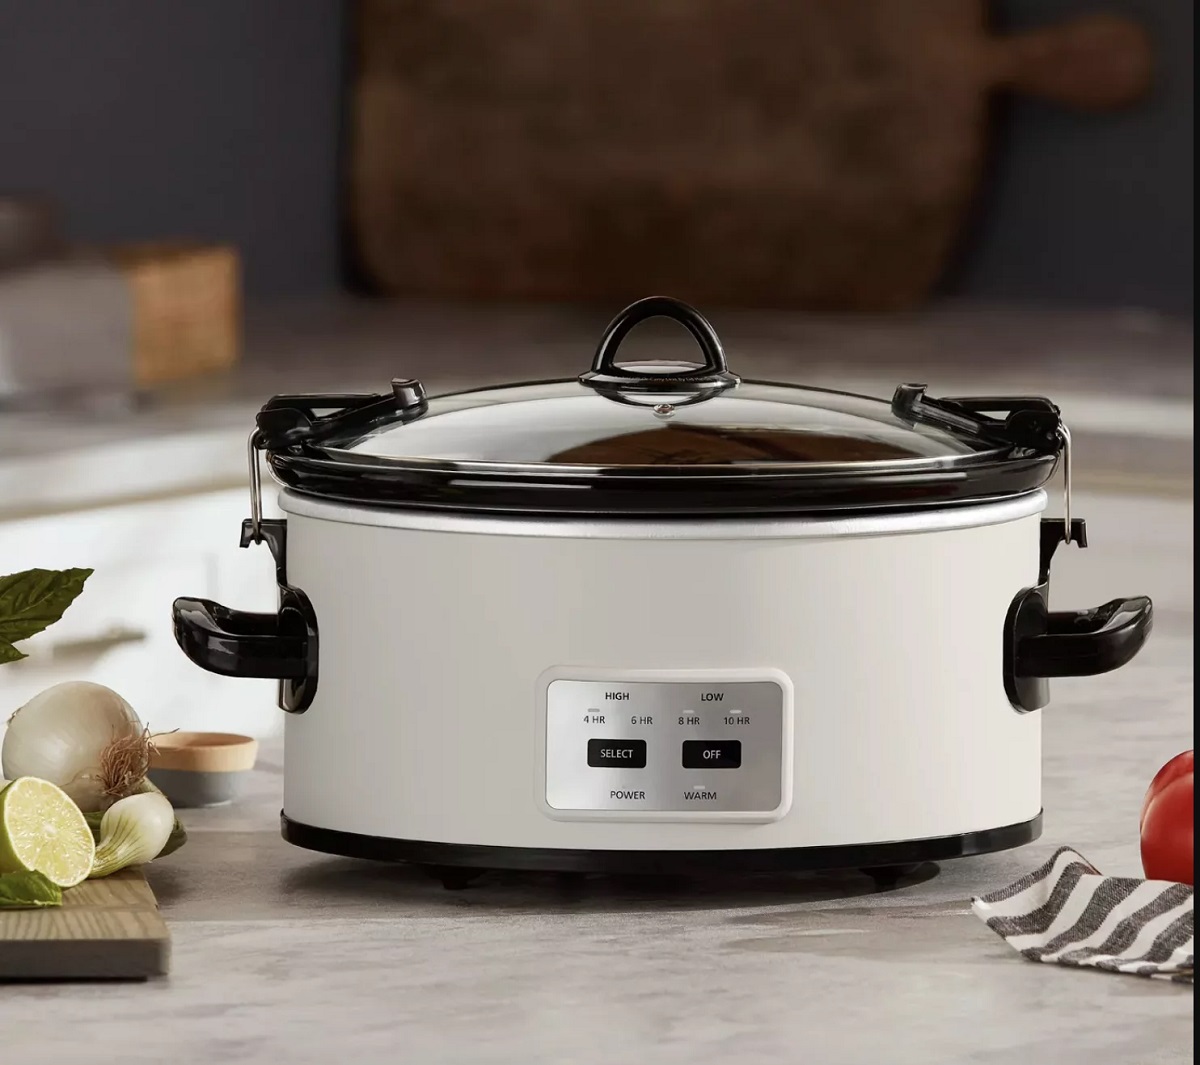 2pcs Slow Cooker Liner Heat Resistant Silicone Crock-pot Liners Kitchen  Supplies